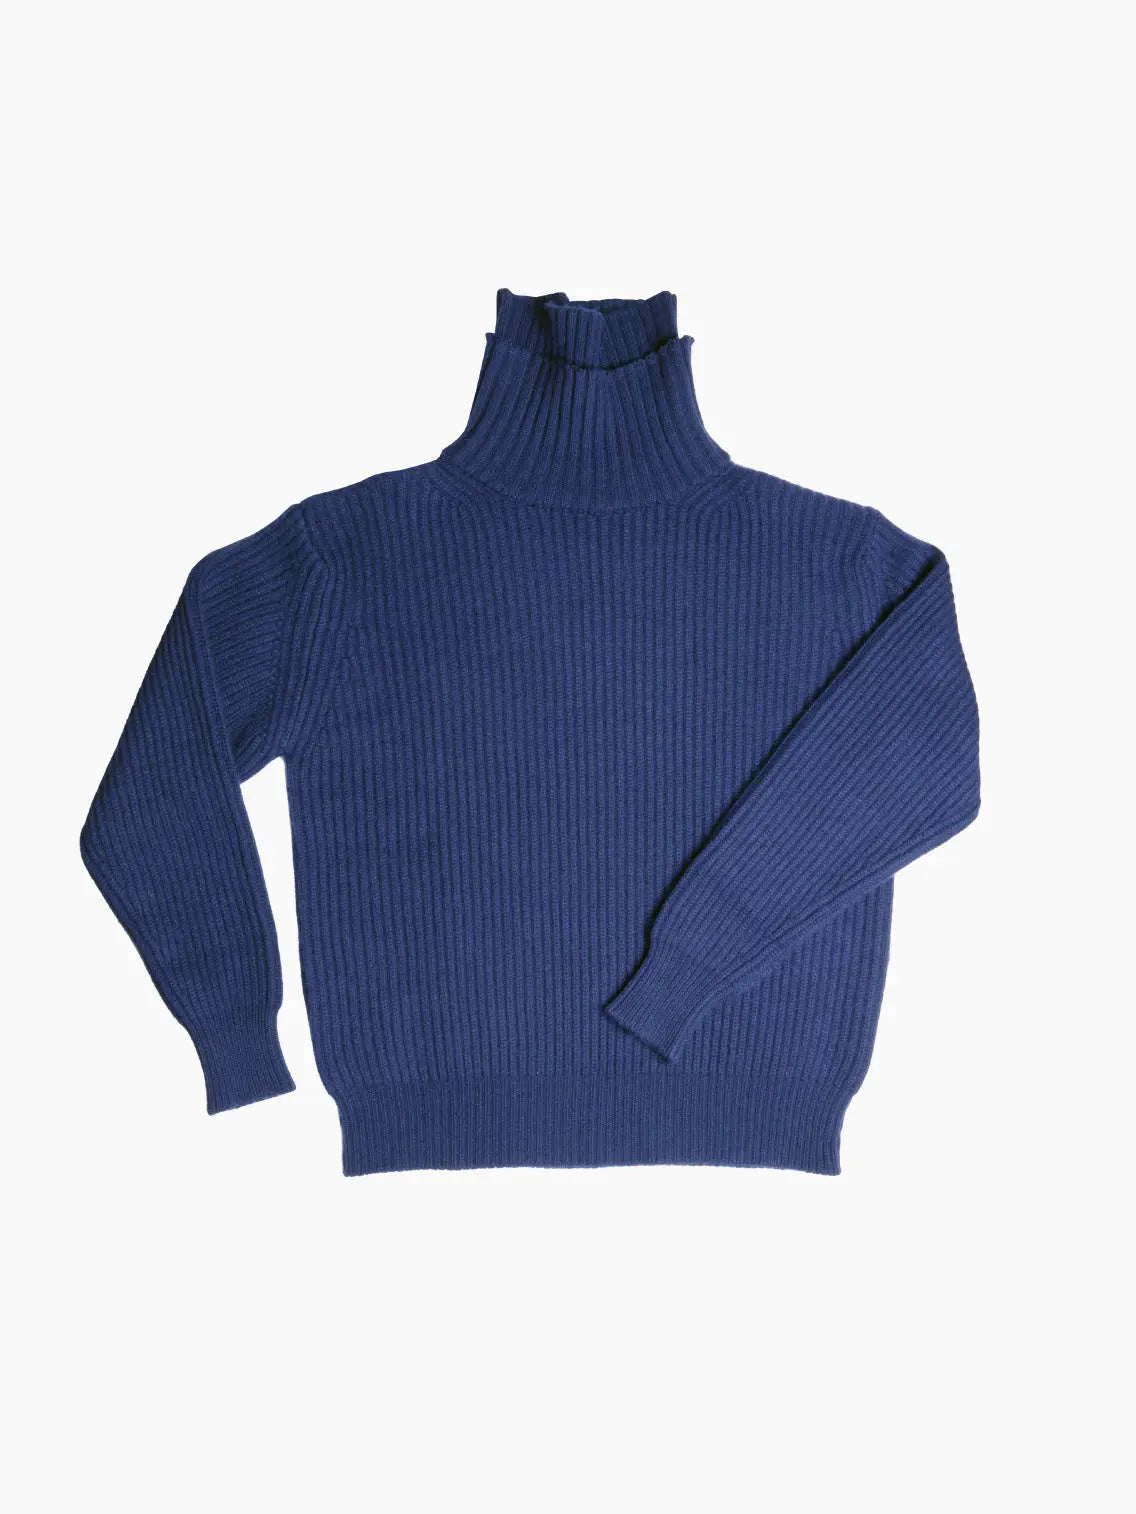 Bolst Sweater Navy Bielo